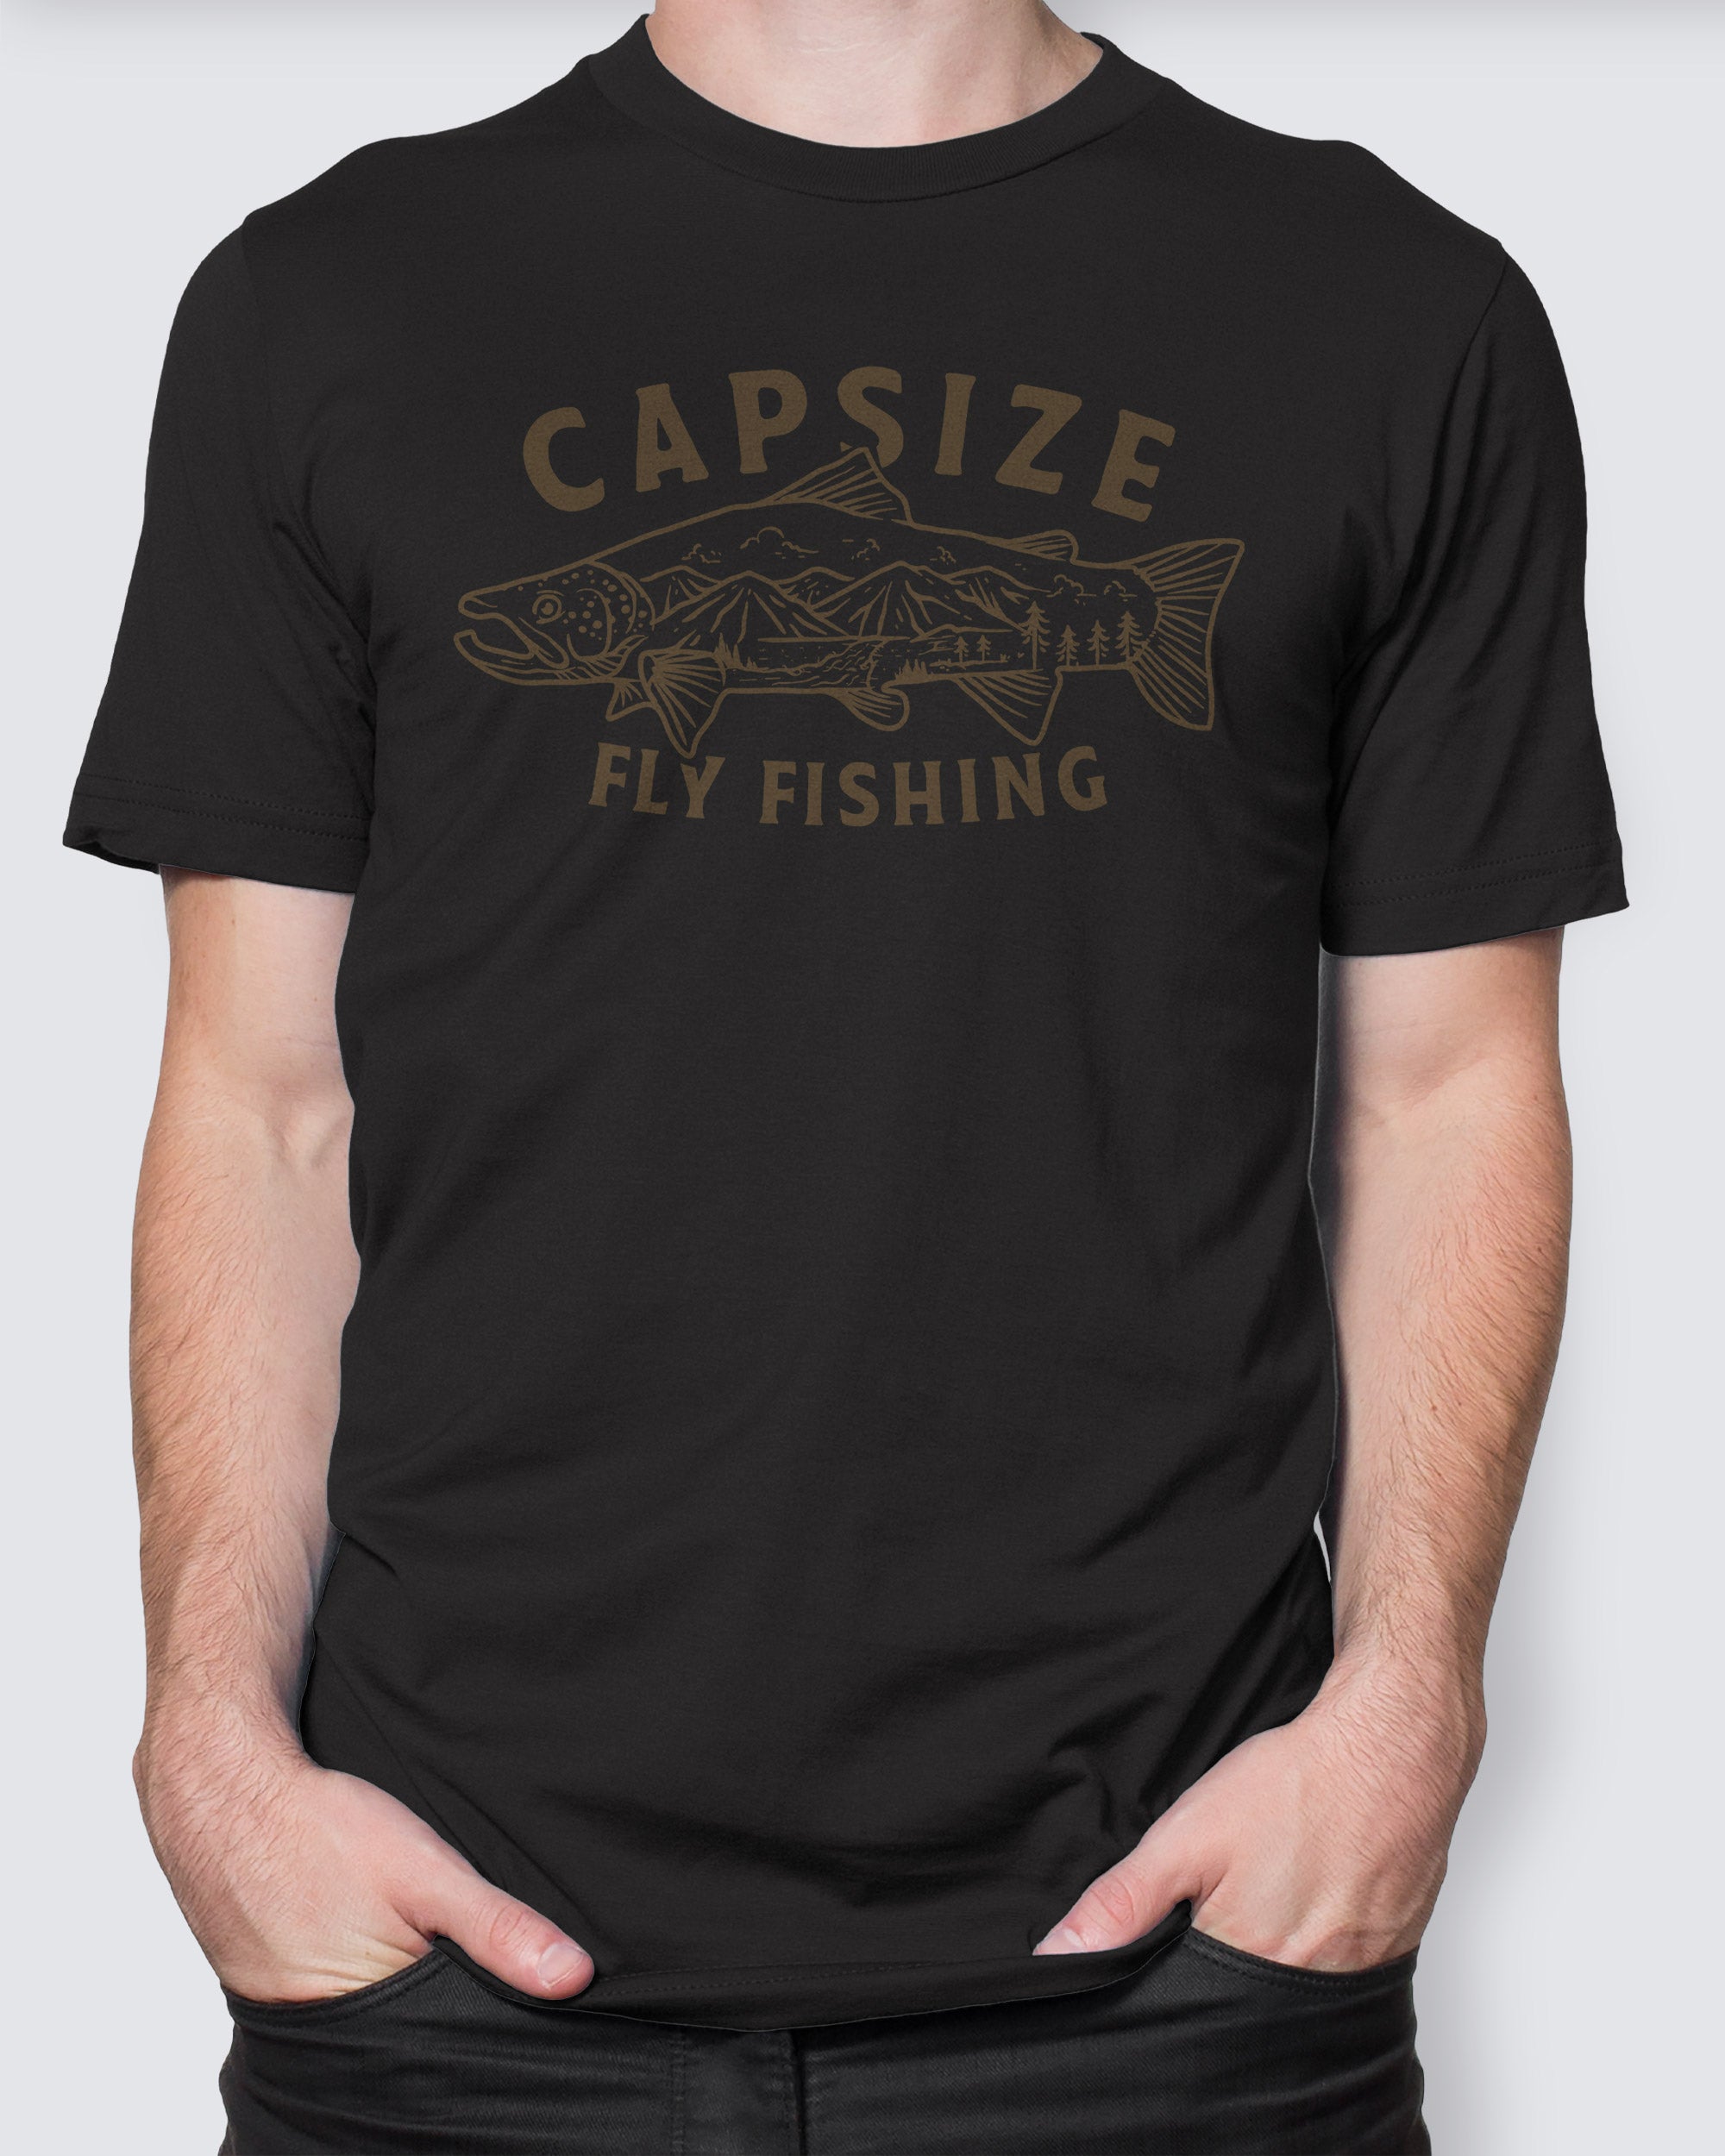 Fly Fishing T-Shirt | Wild Salmon Black - Capsize Fly Fishing